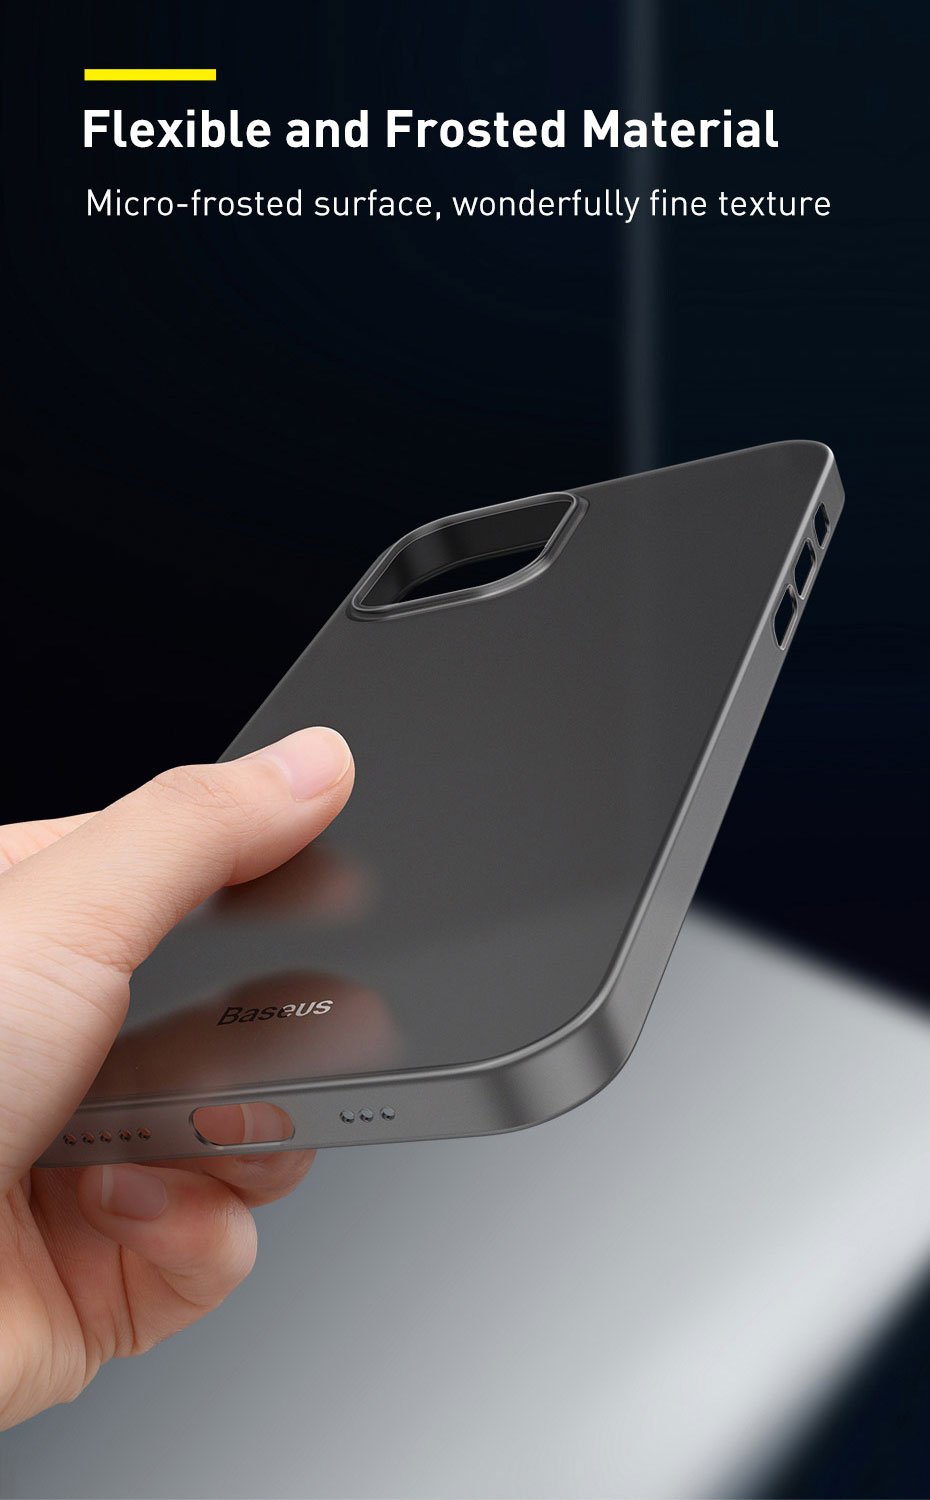 Baseus for iPhone 12 Pro Max Case Matte 0.4mm Ultra Thin PP Anti-Scratch Anti-Fingerprint Translucent Protective Case